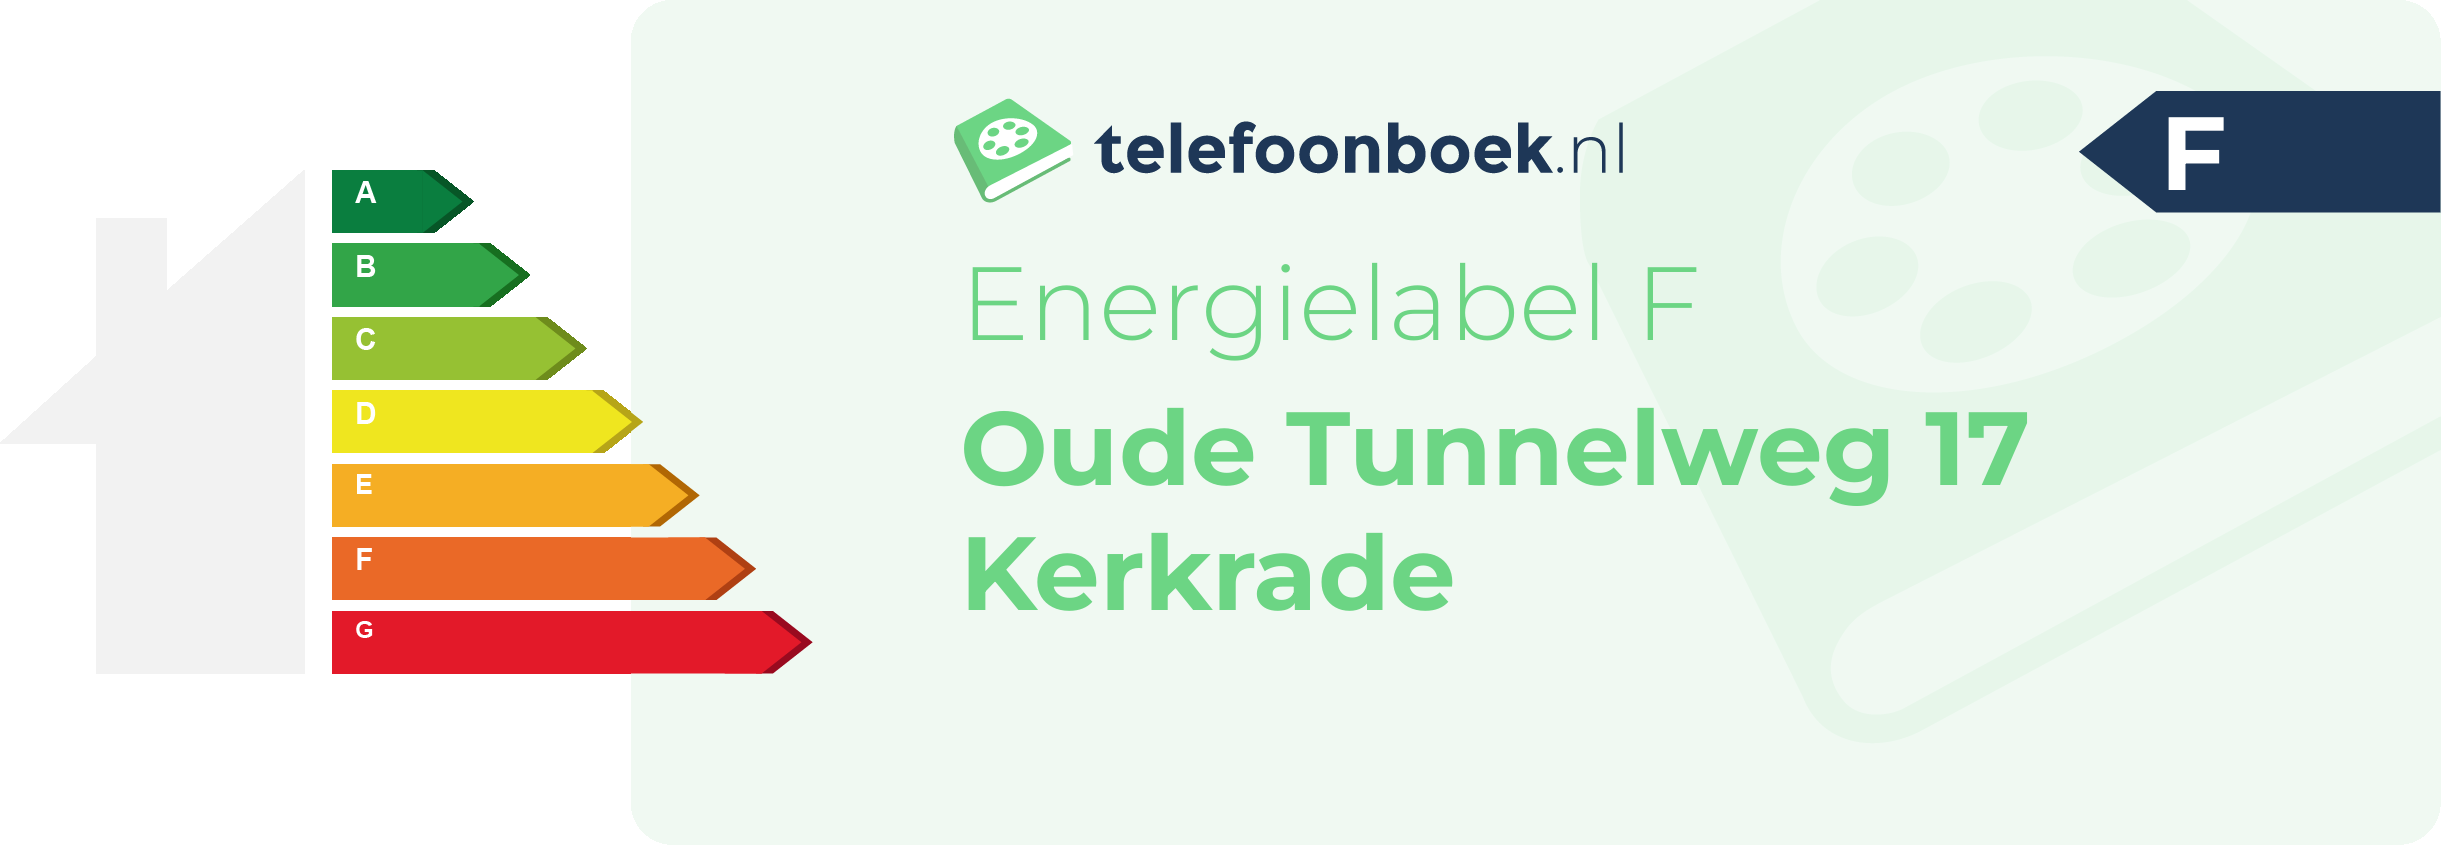 Energielabel Oude Tunnelweg 17 Kerkrade